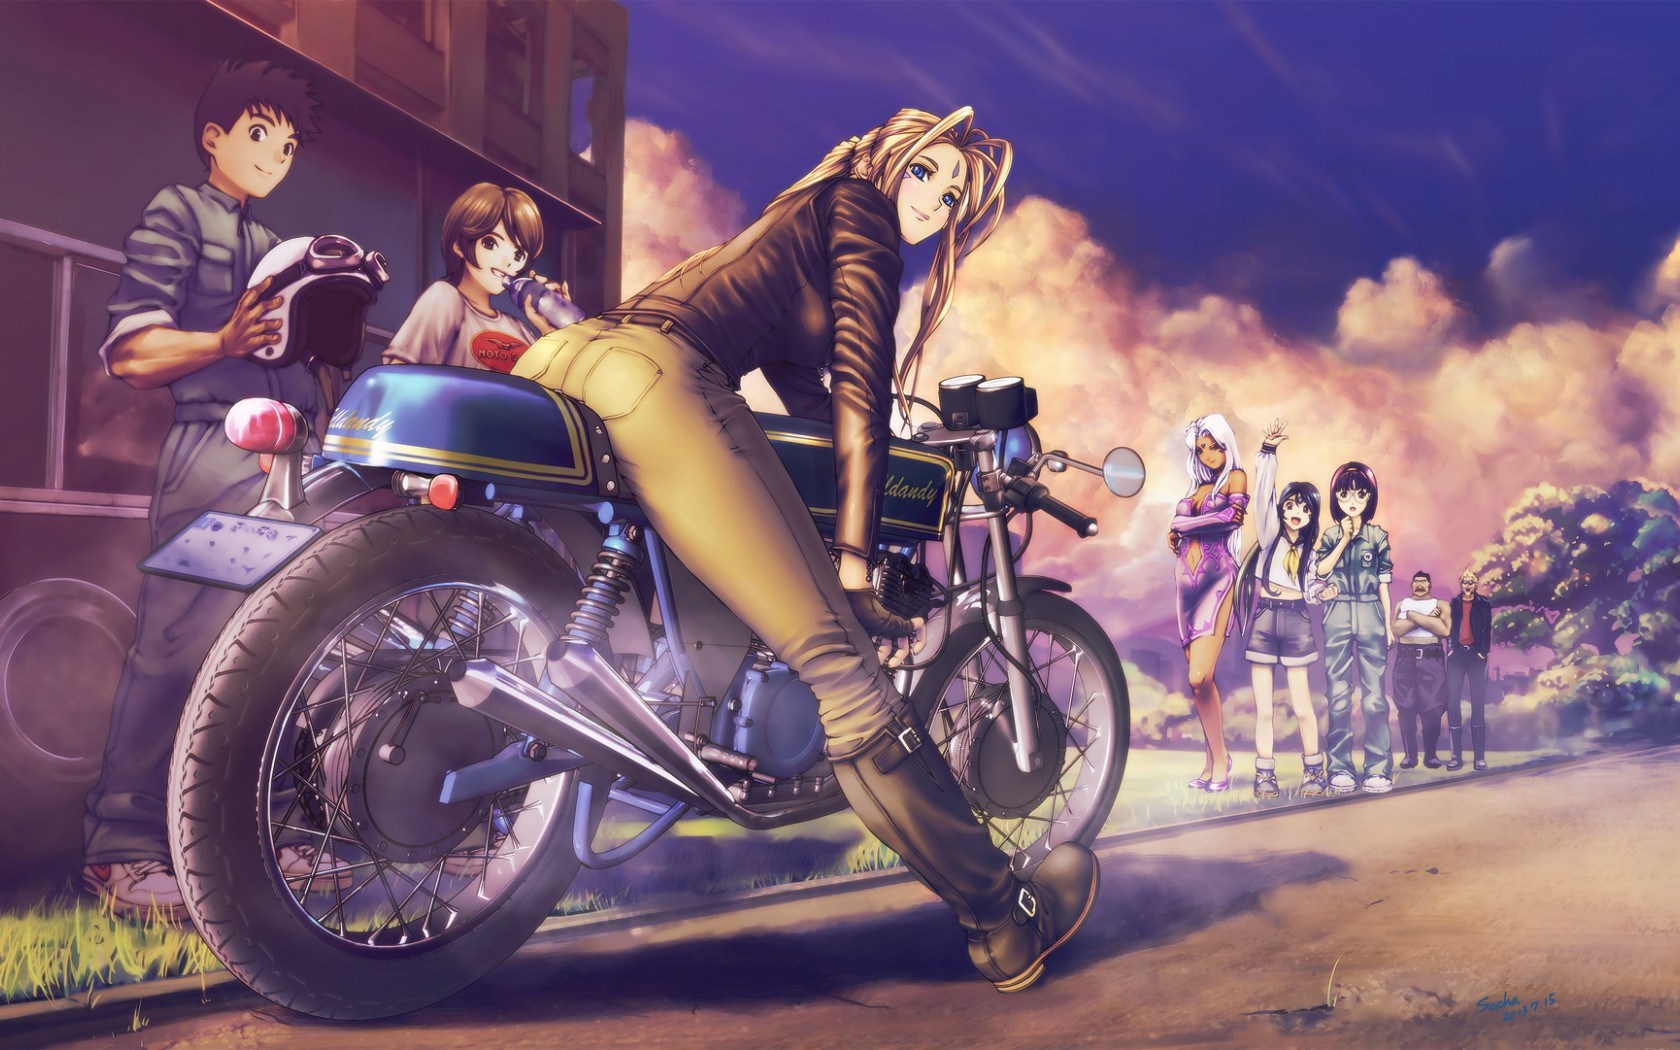 Shop Anime Motorcycle Helmet Online - Etsy